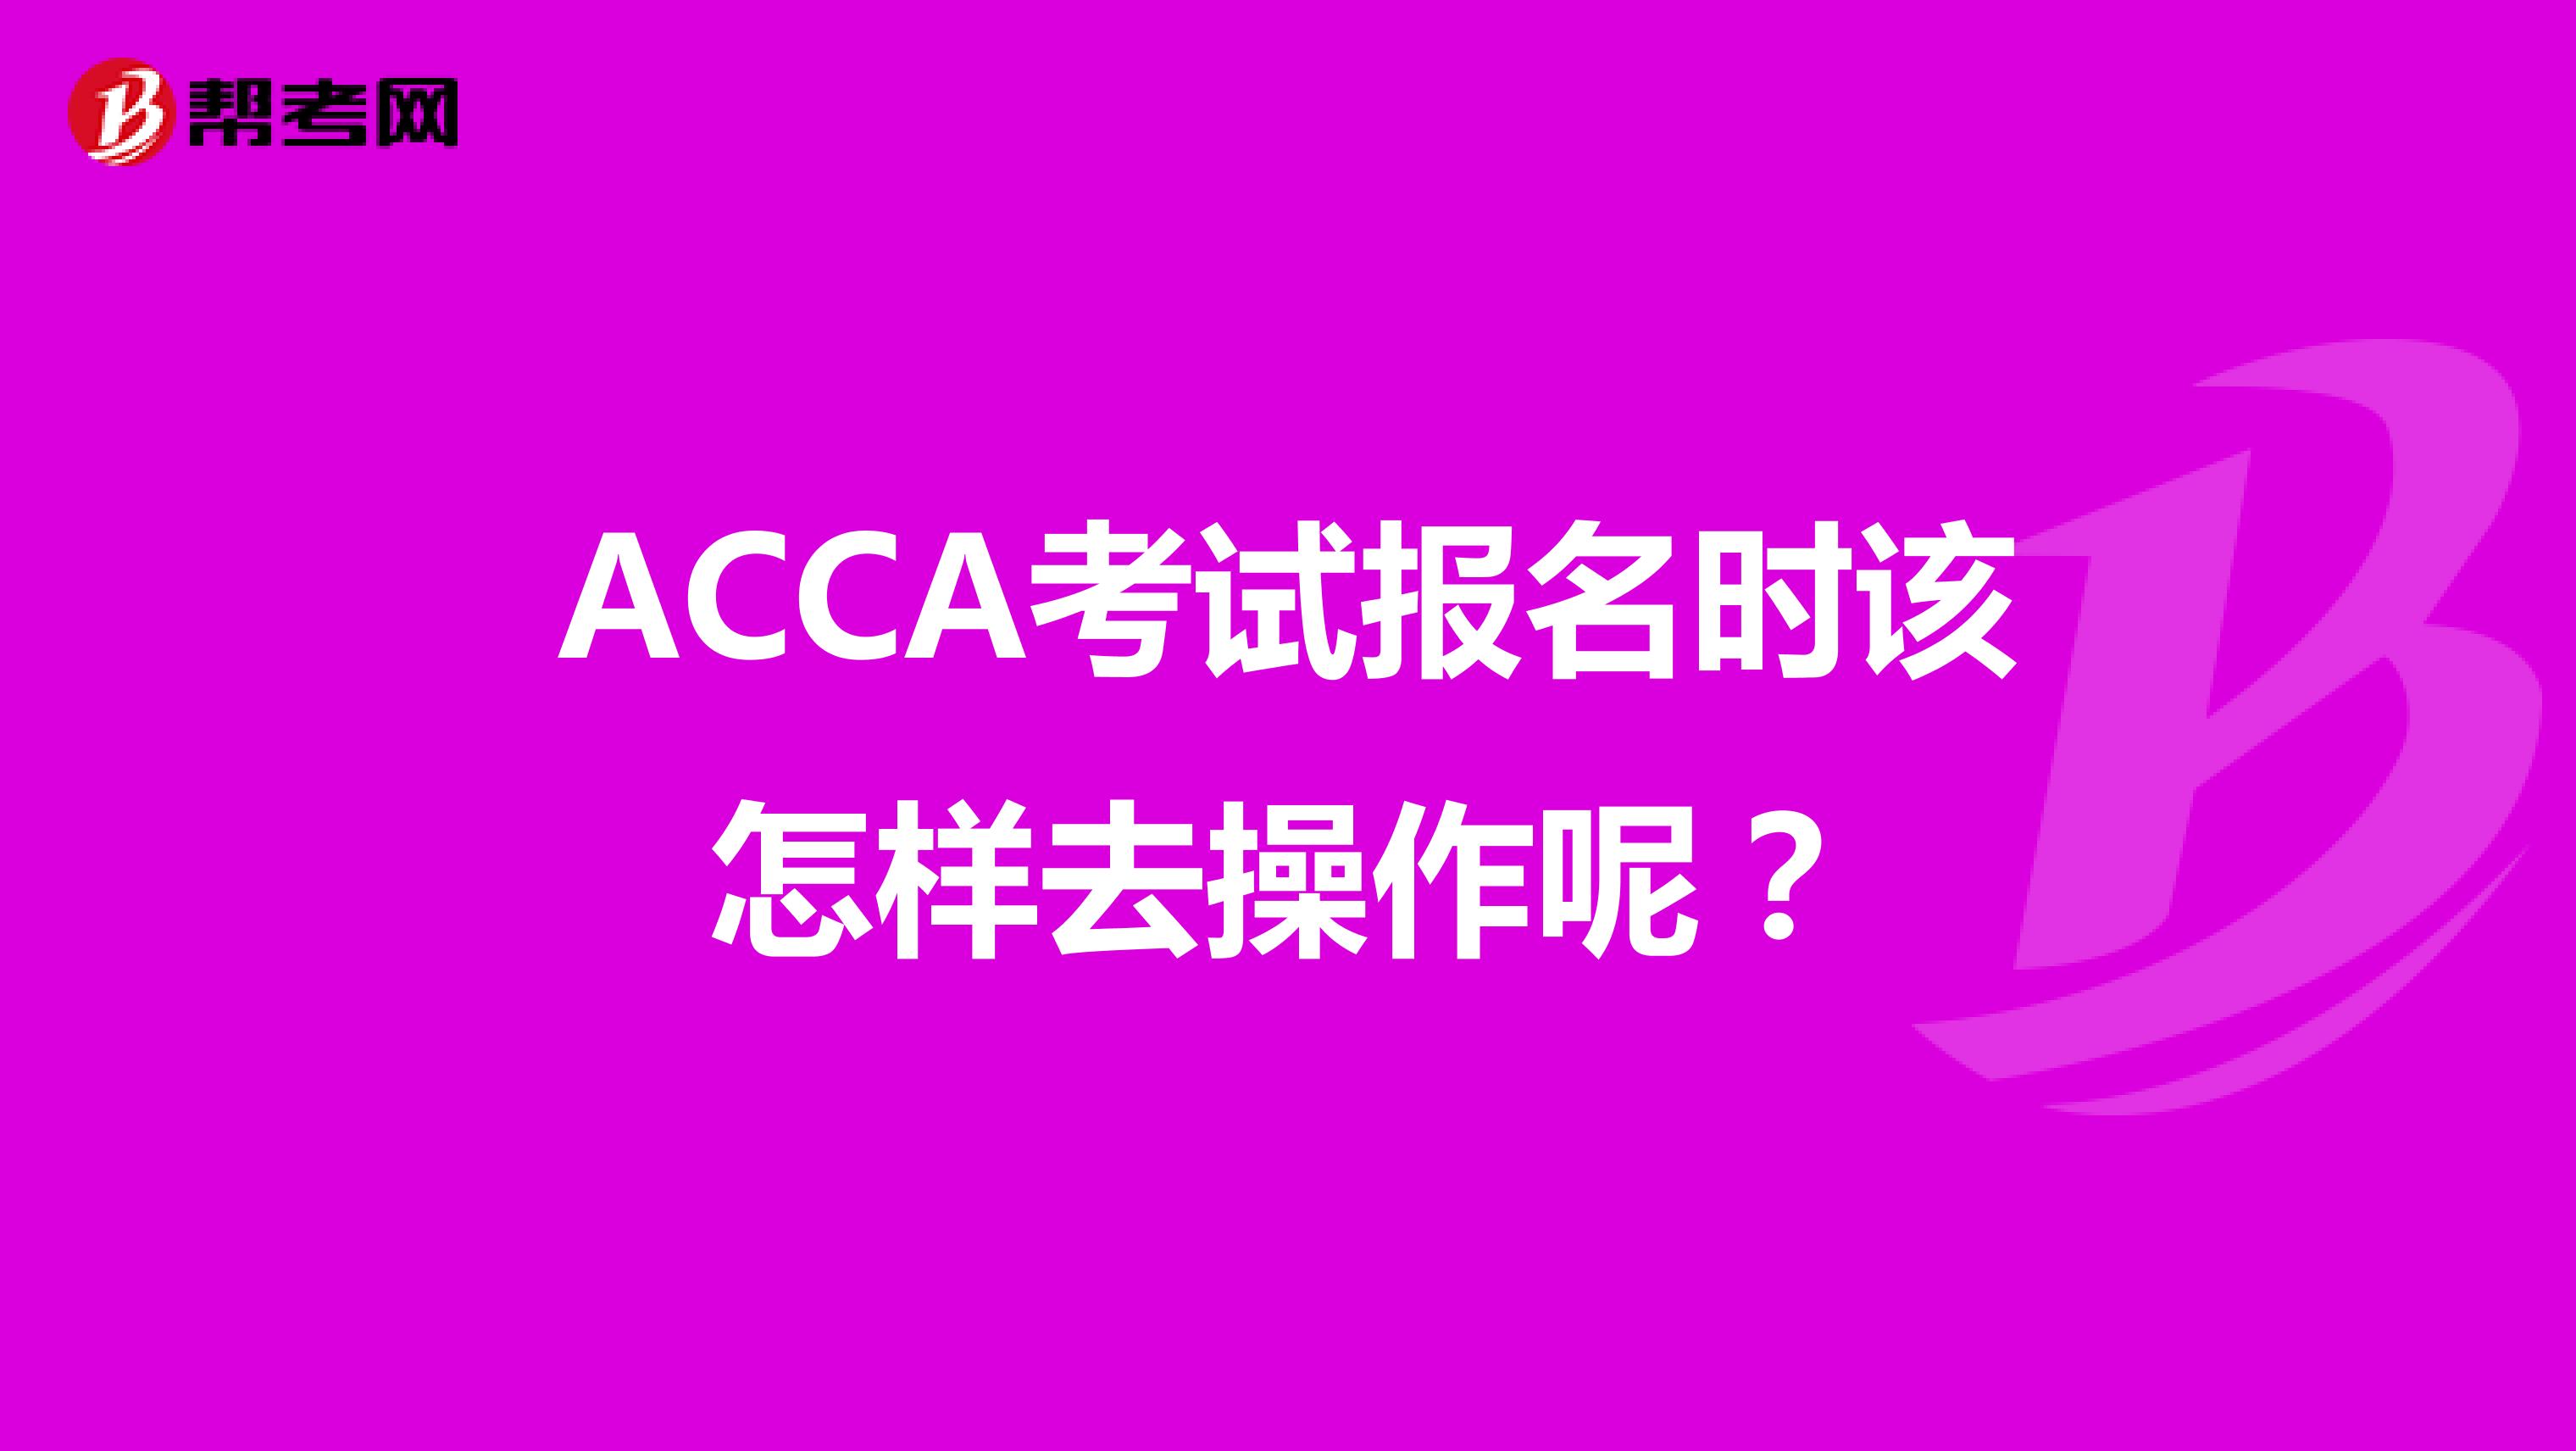 ACCA考试报名时该怎样去操作呢？